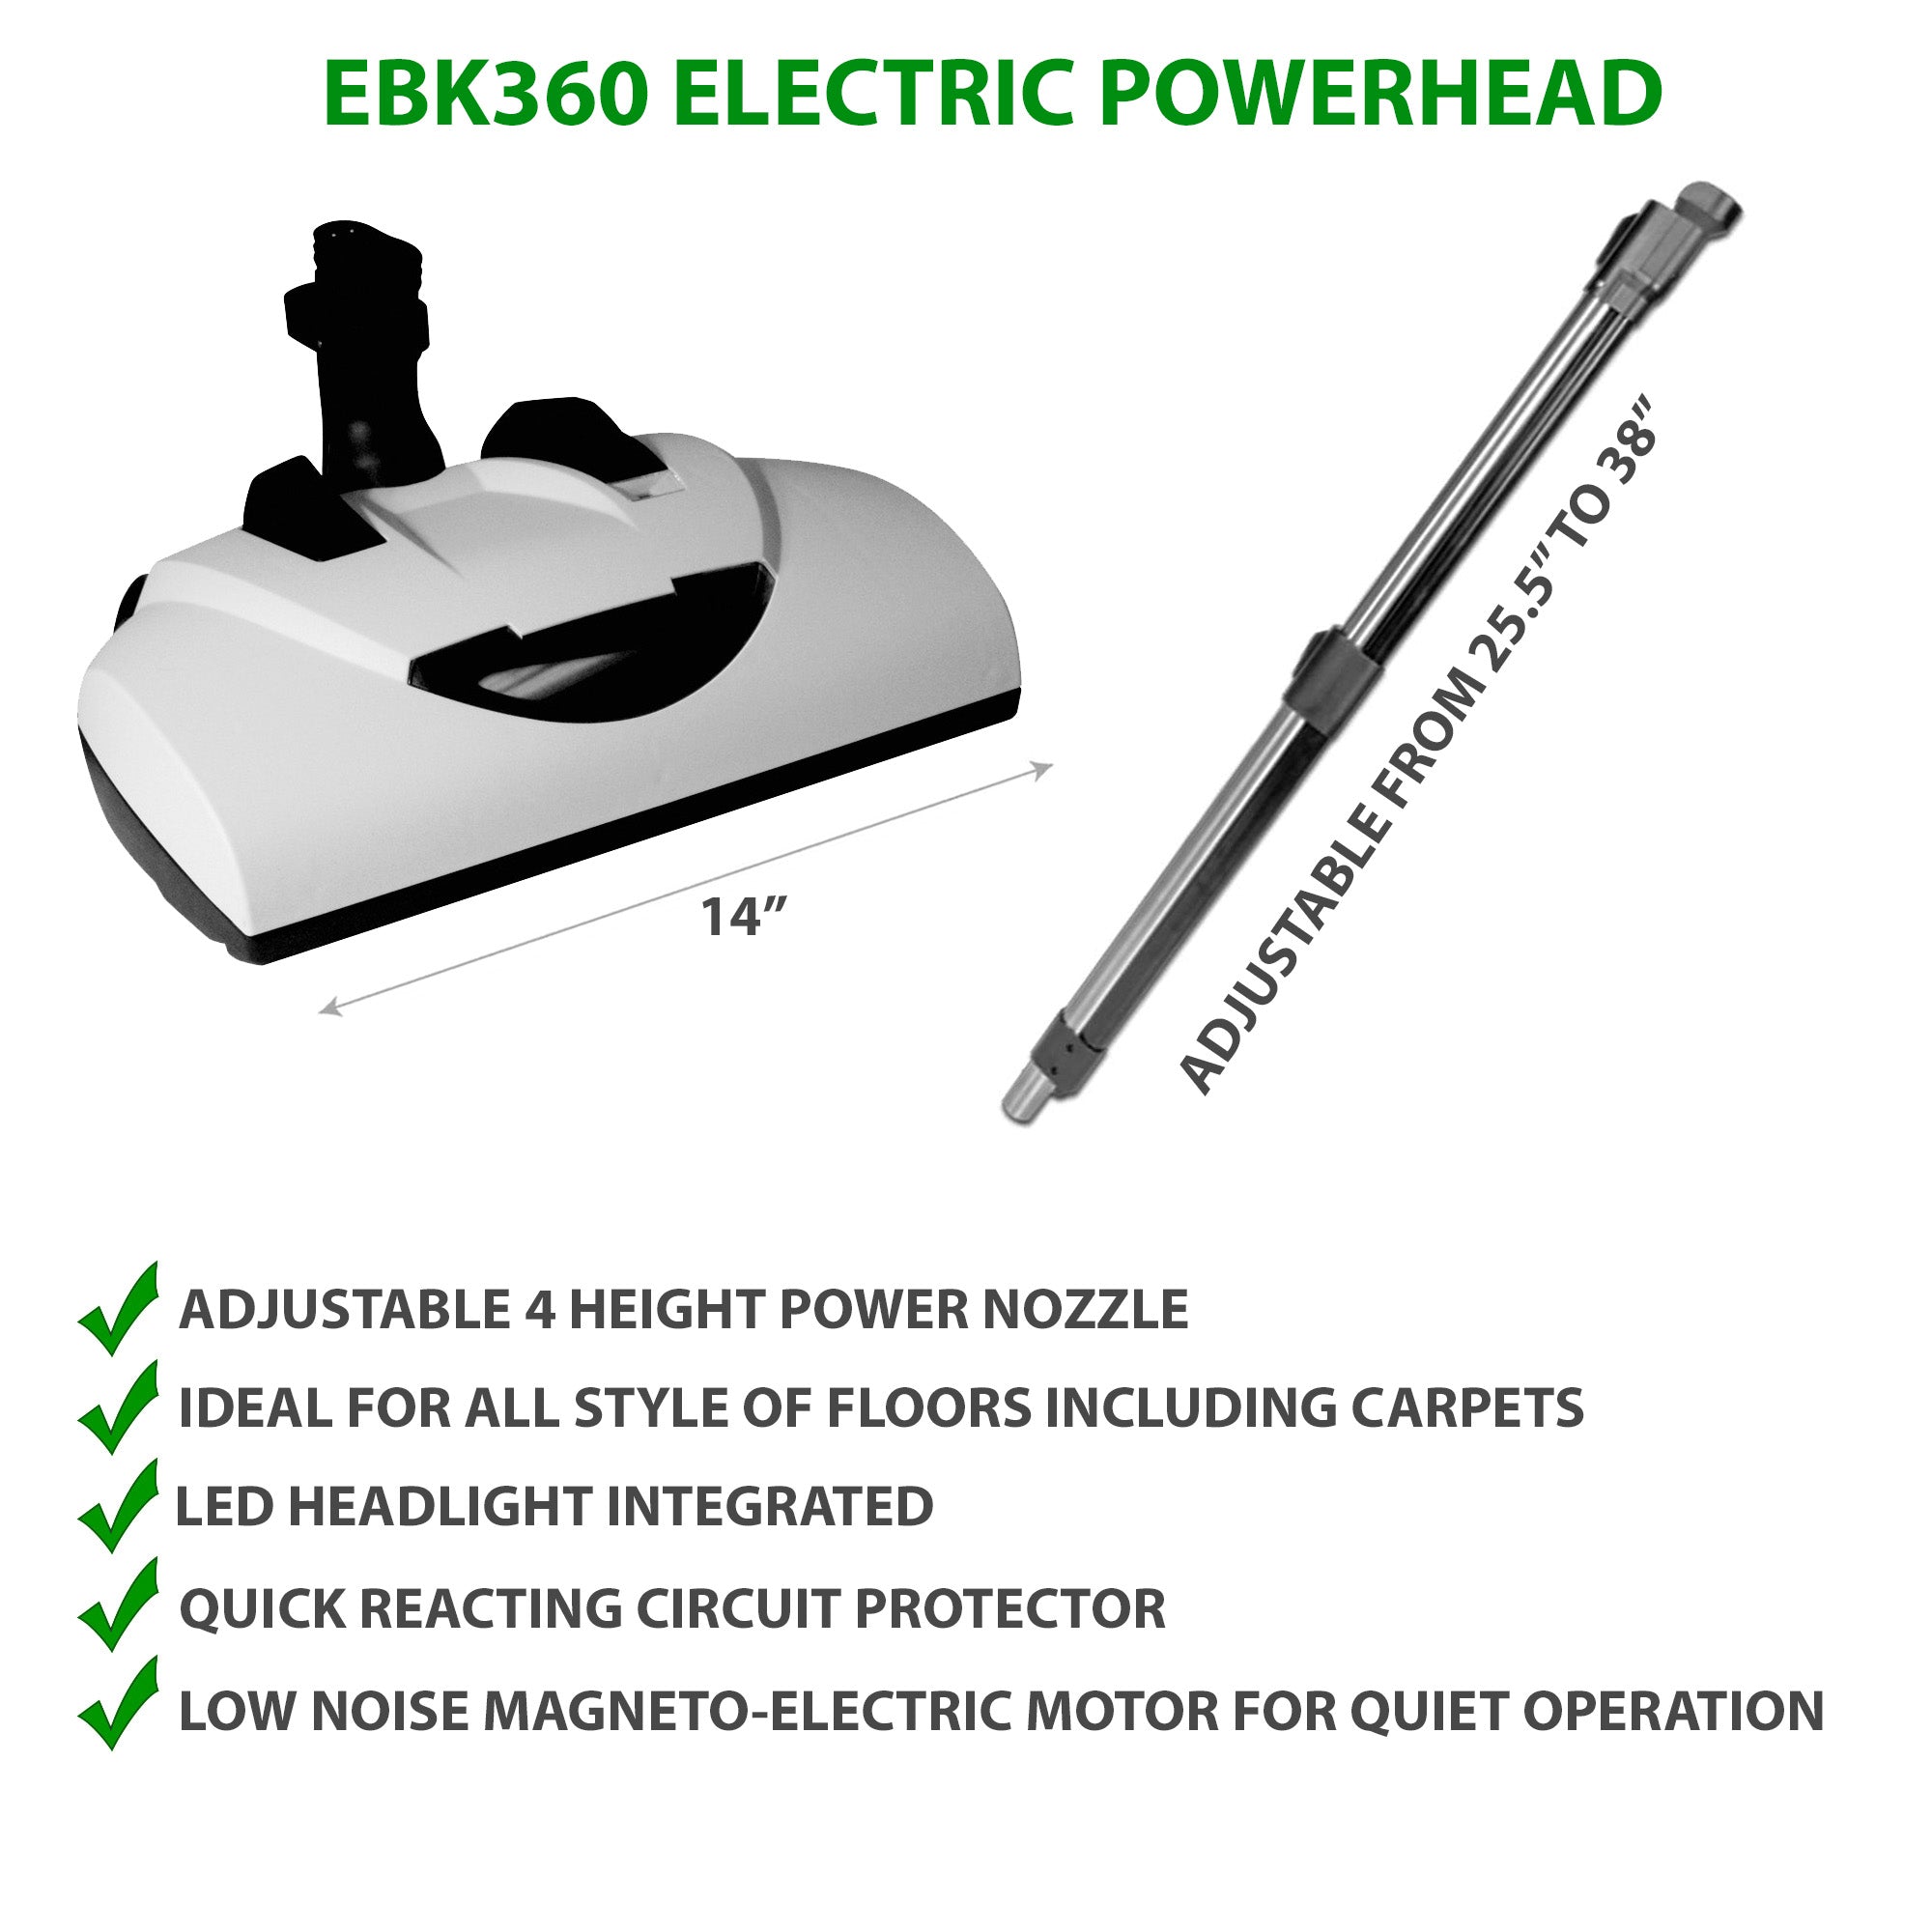 Wessel Werk EBK360 Electric Powerhead with Adjustable Wand - Adjustable 4 height power nozzle